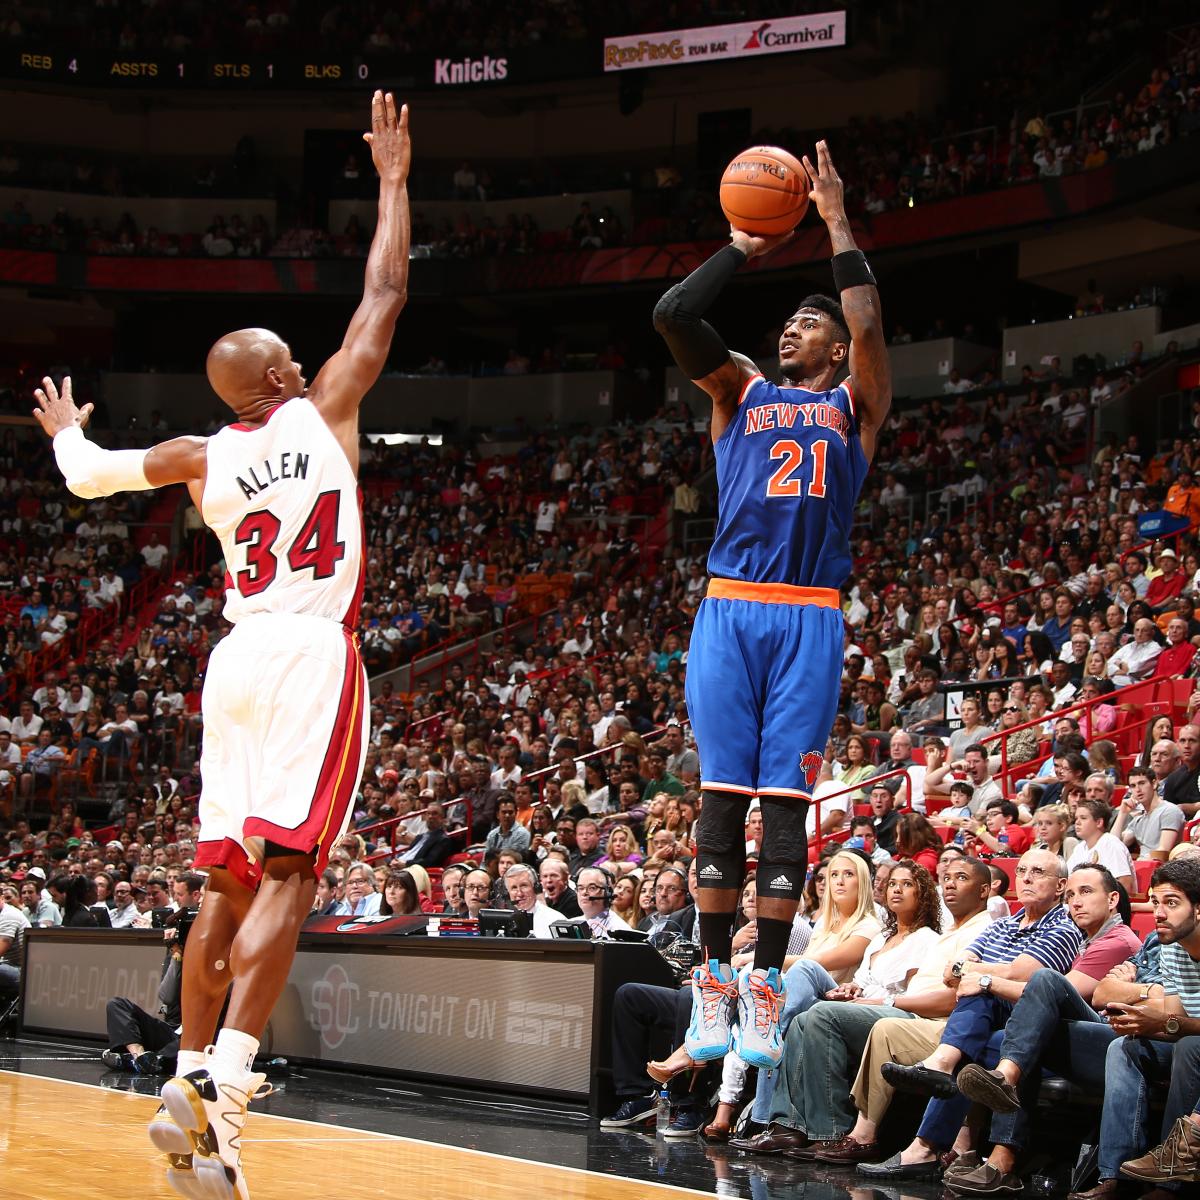 New York Knicks vs. Miami Heat Live Score and Analysis News, Scores